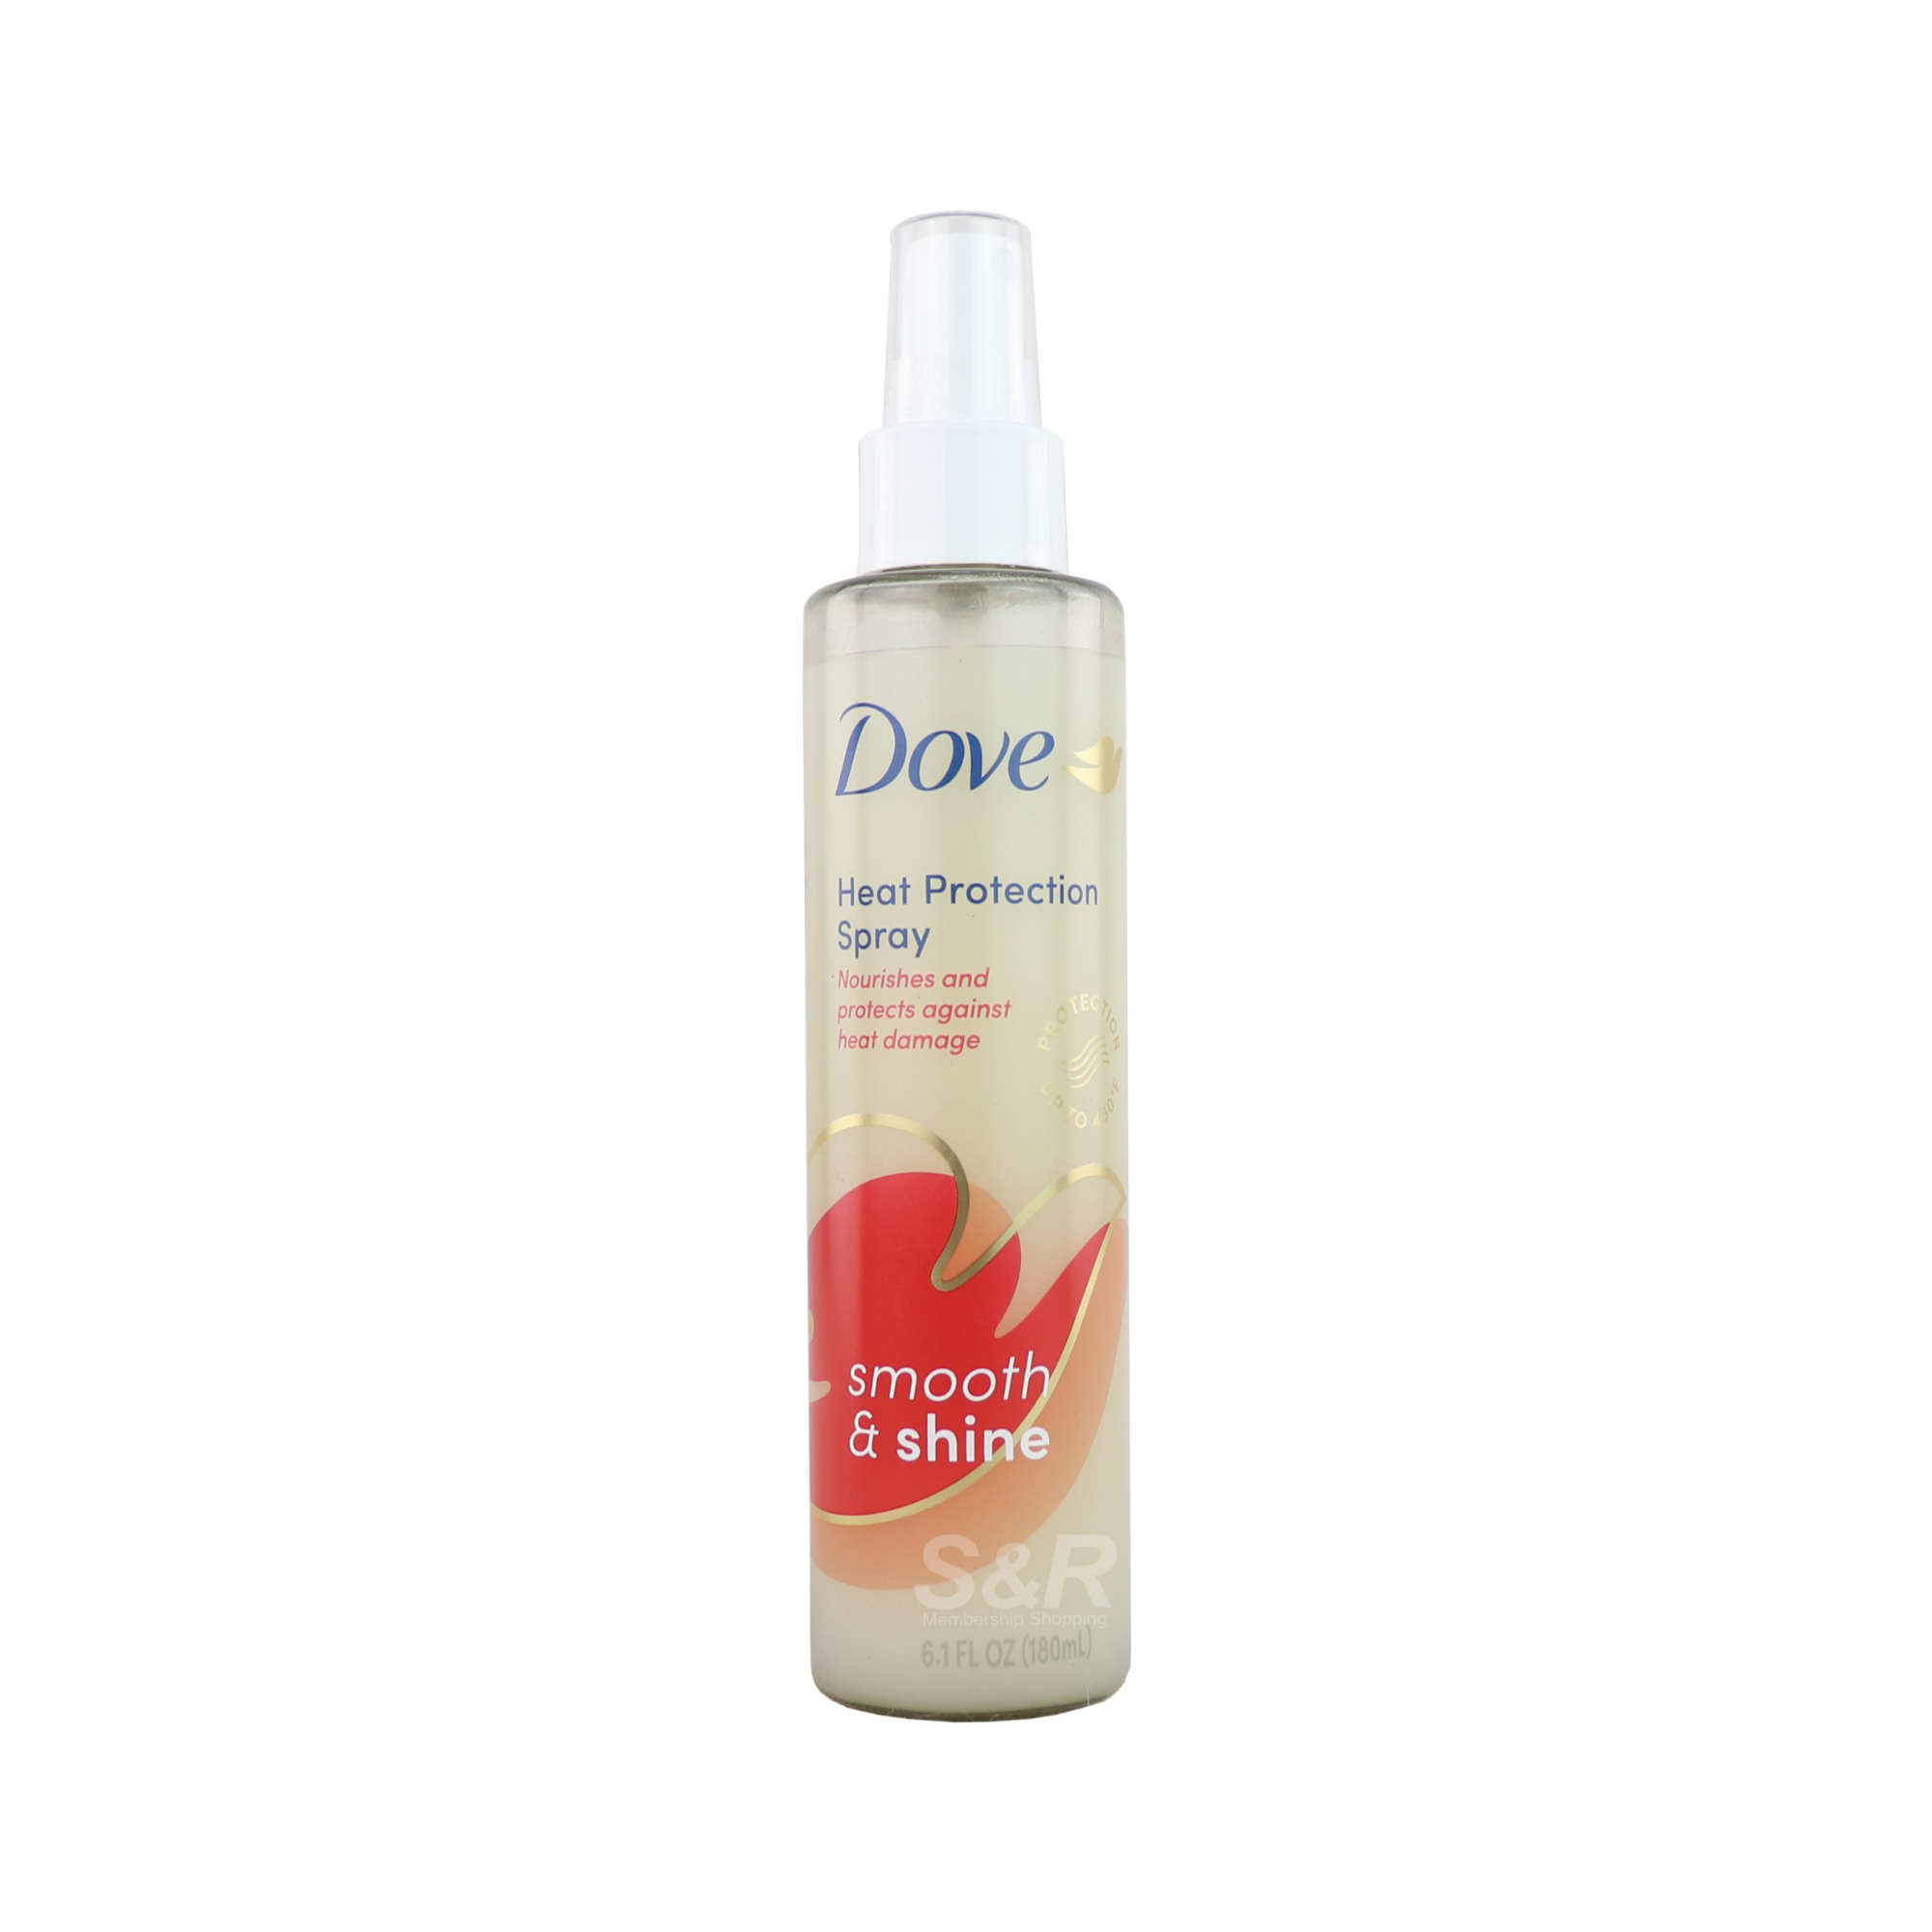 Dove Smooth & Shine Heat Protection Spray 180mL